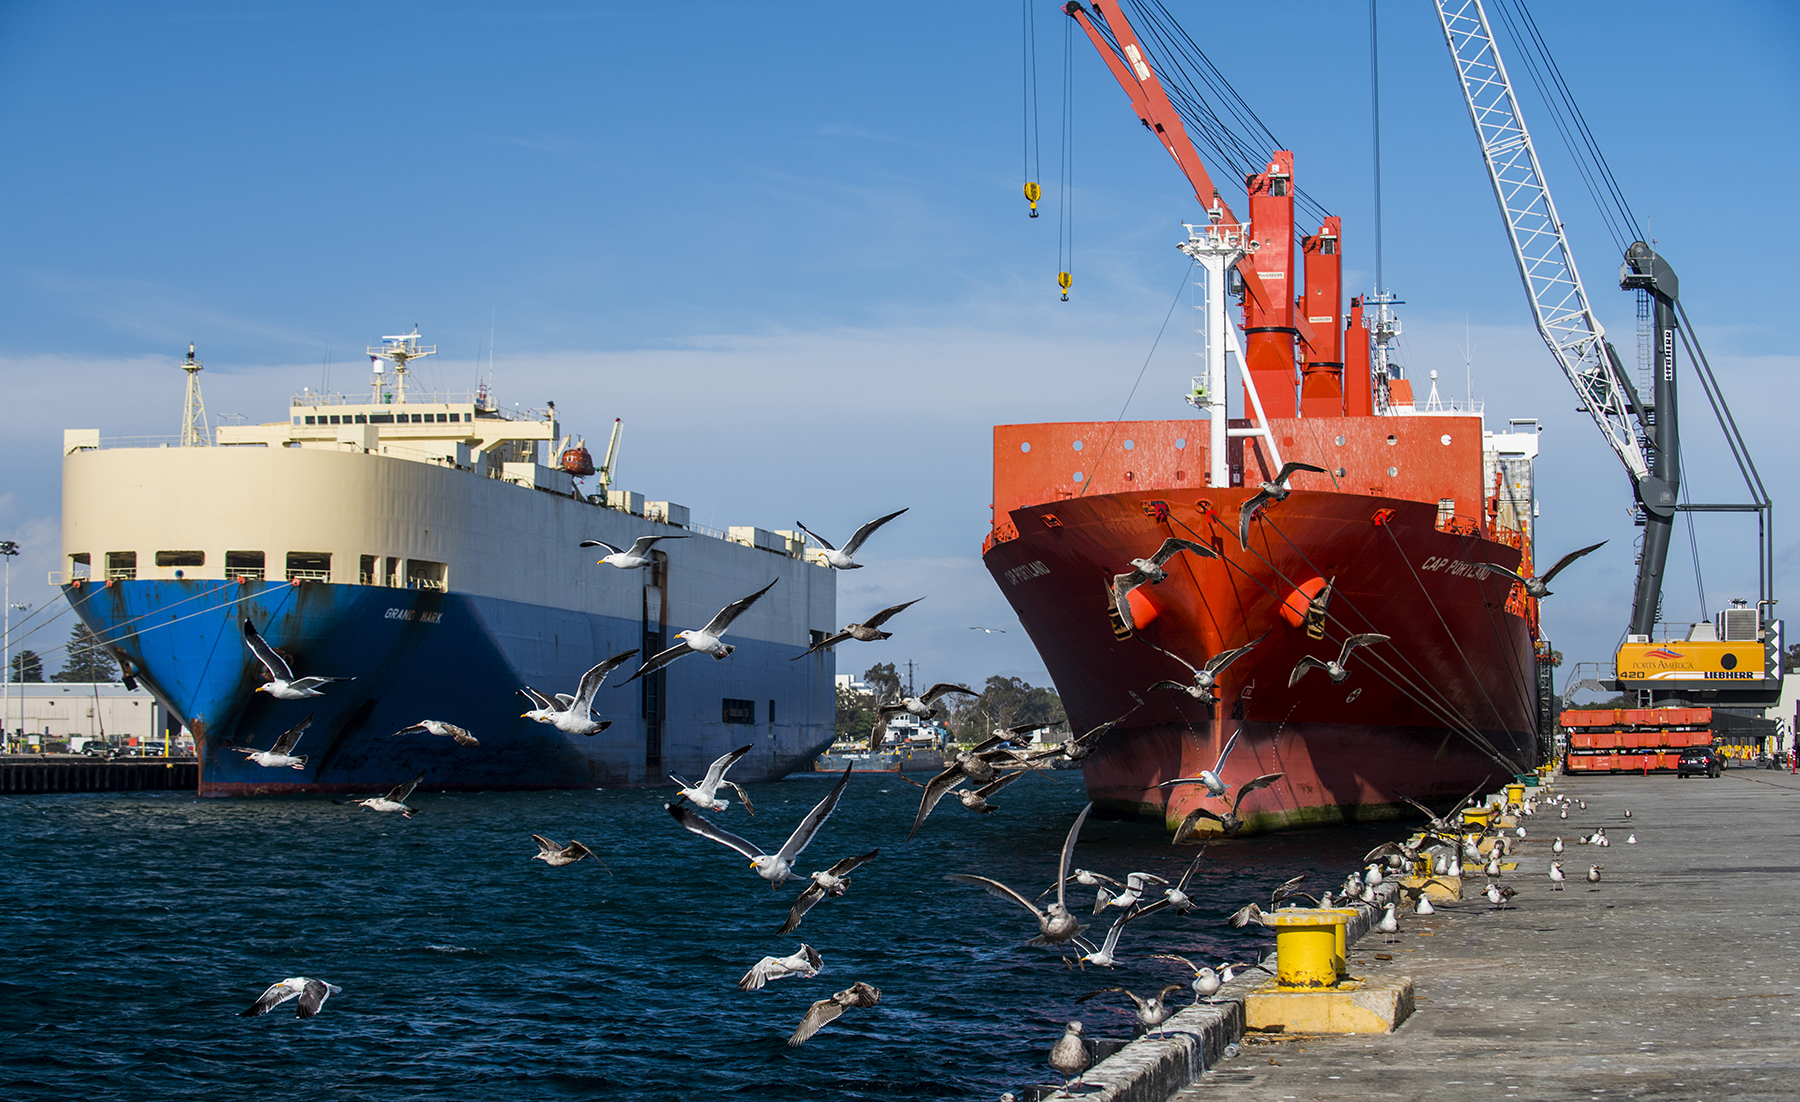 Vessels at Port of Hueneme